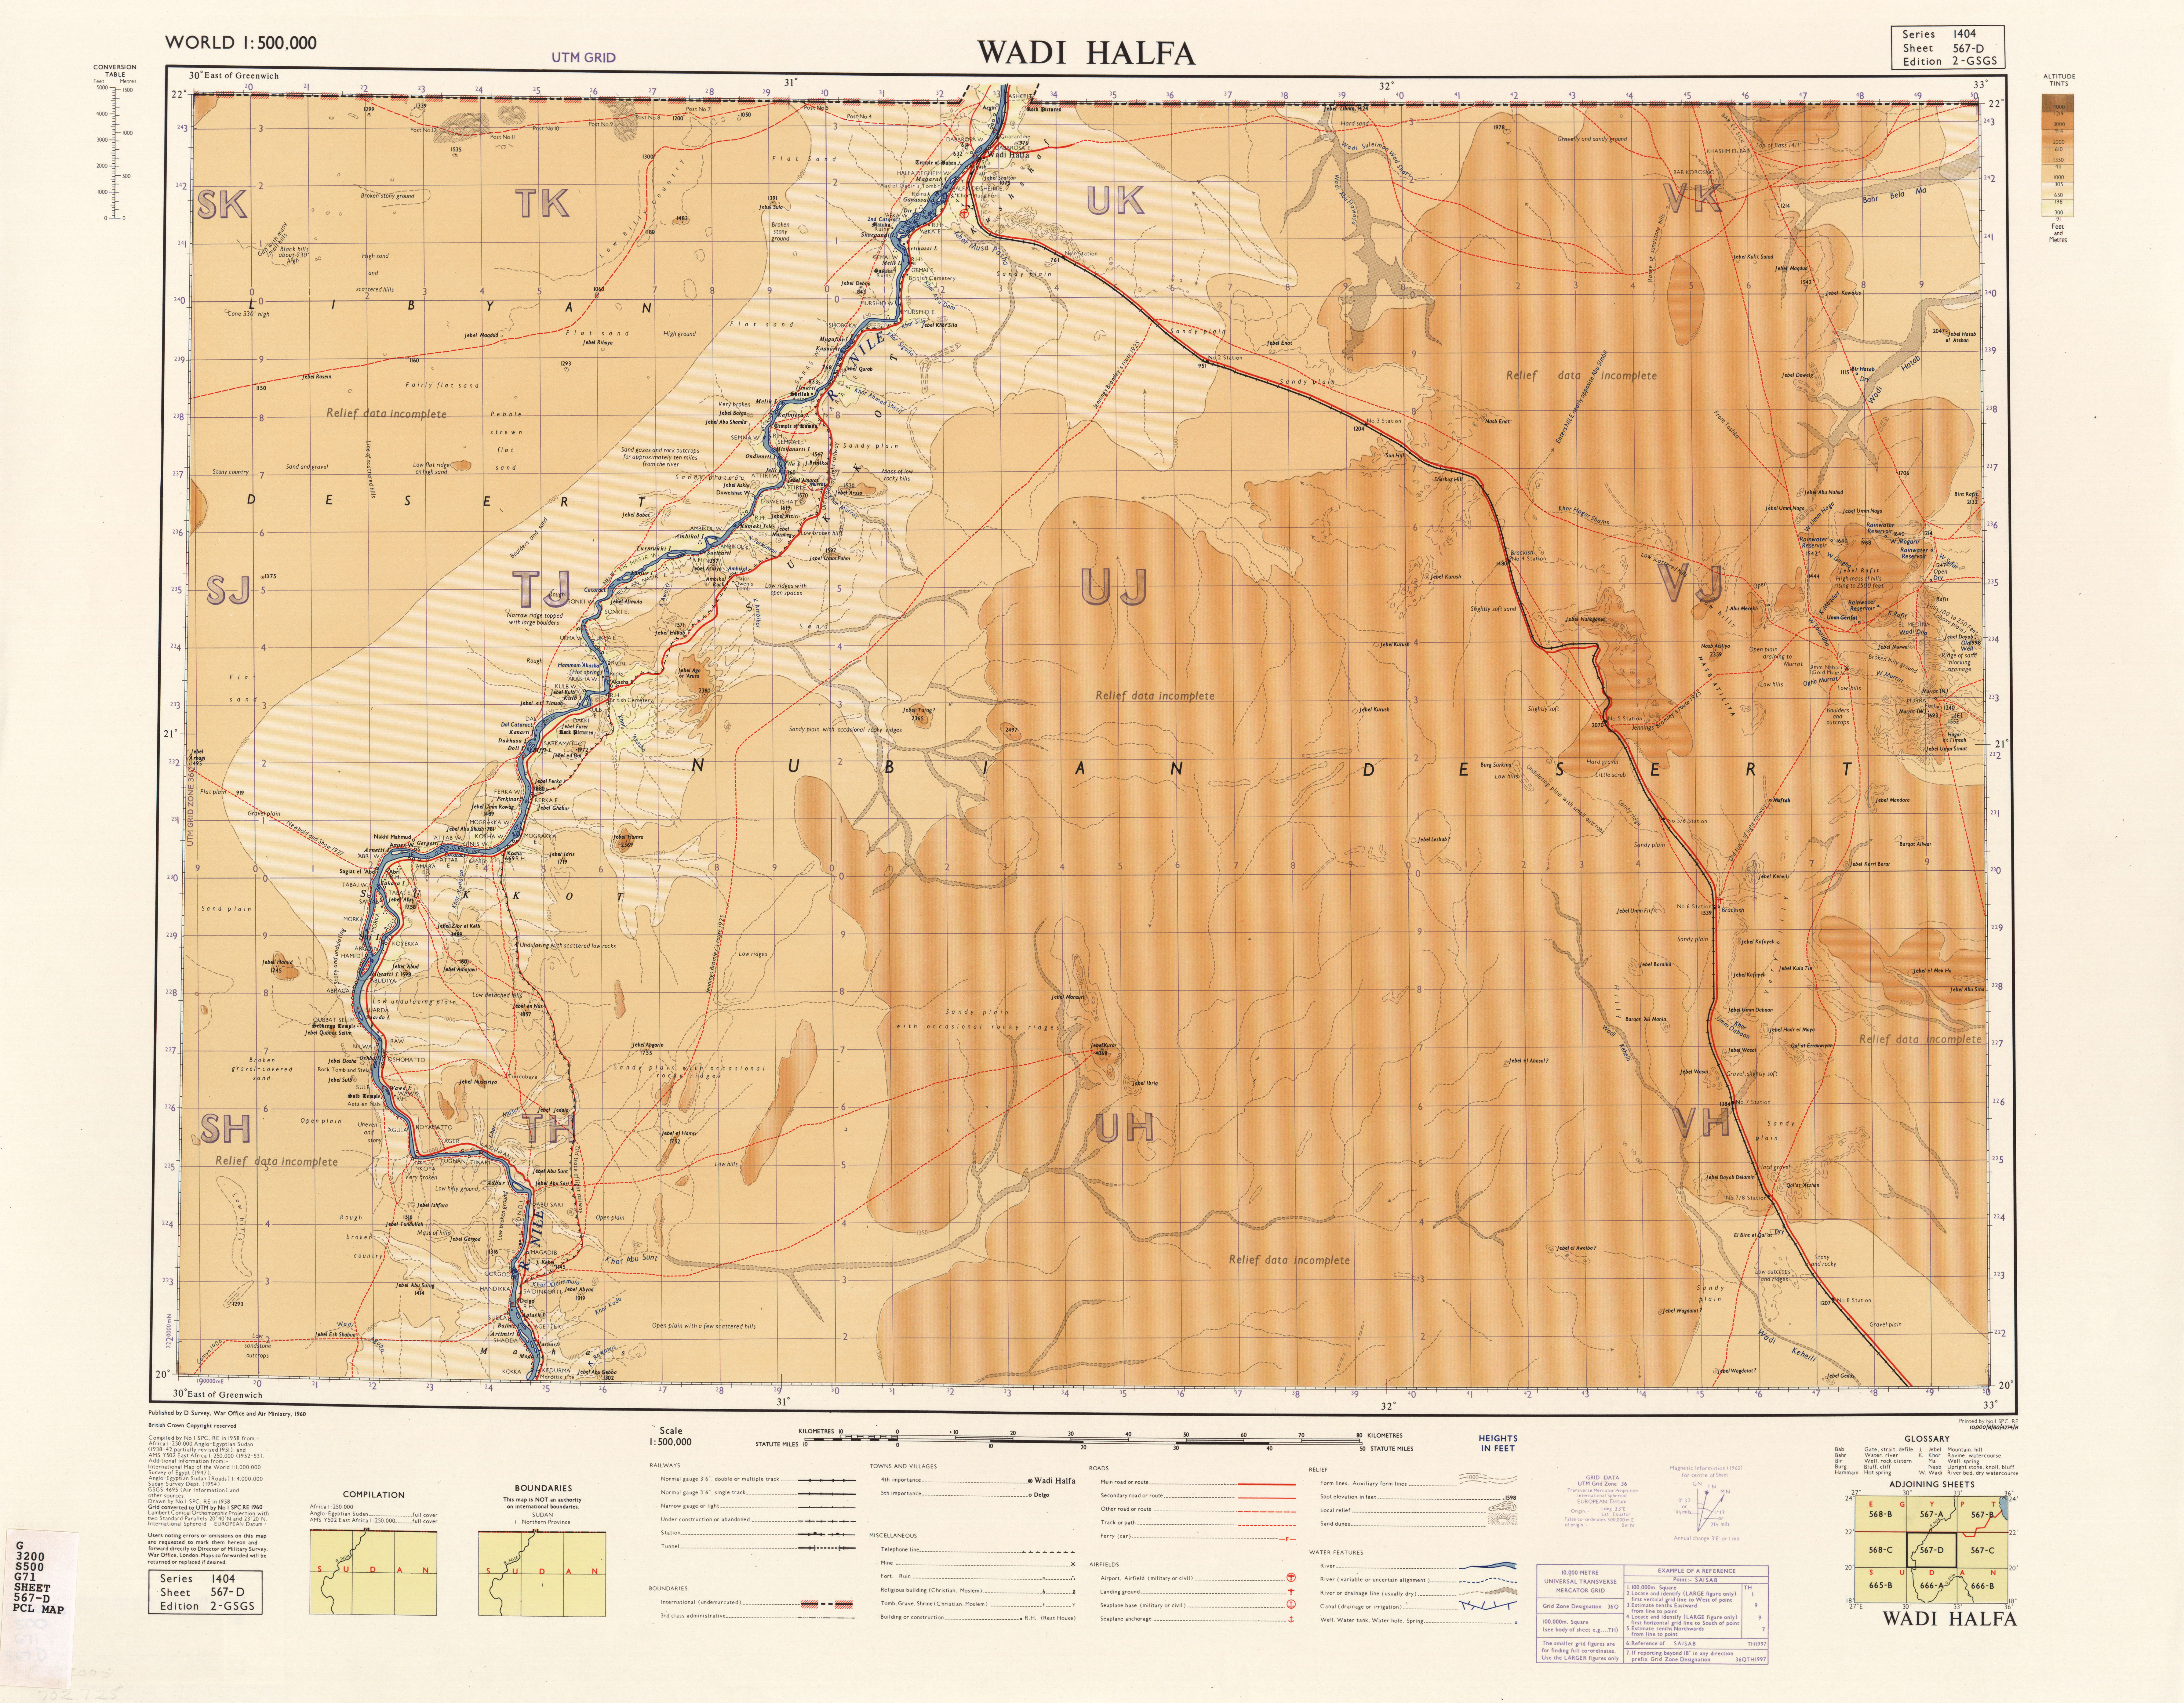 http://www.lib.utexas.edu/maps/ams/world/txu-pclmaps-oclc-13163512-wadi-halfa-567-d.jpg